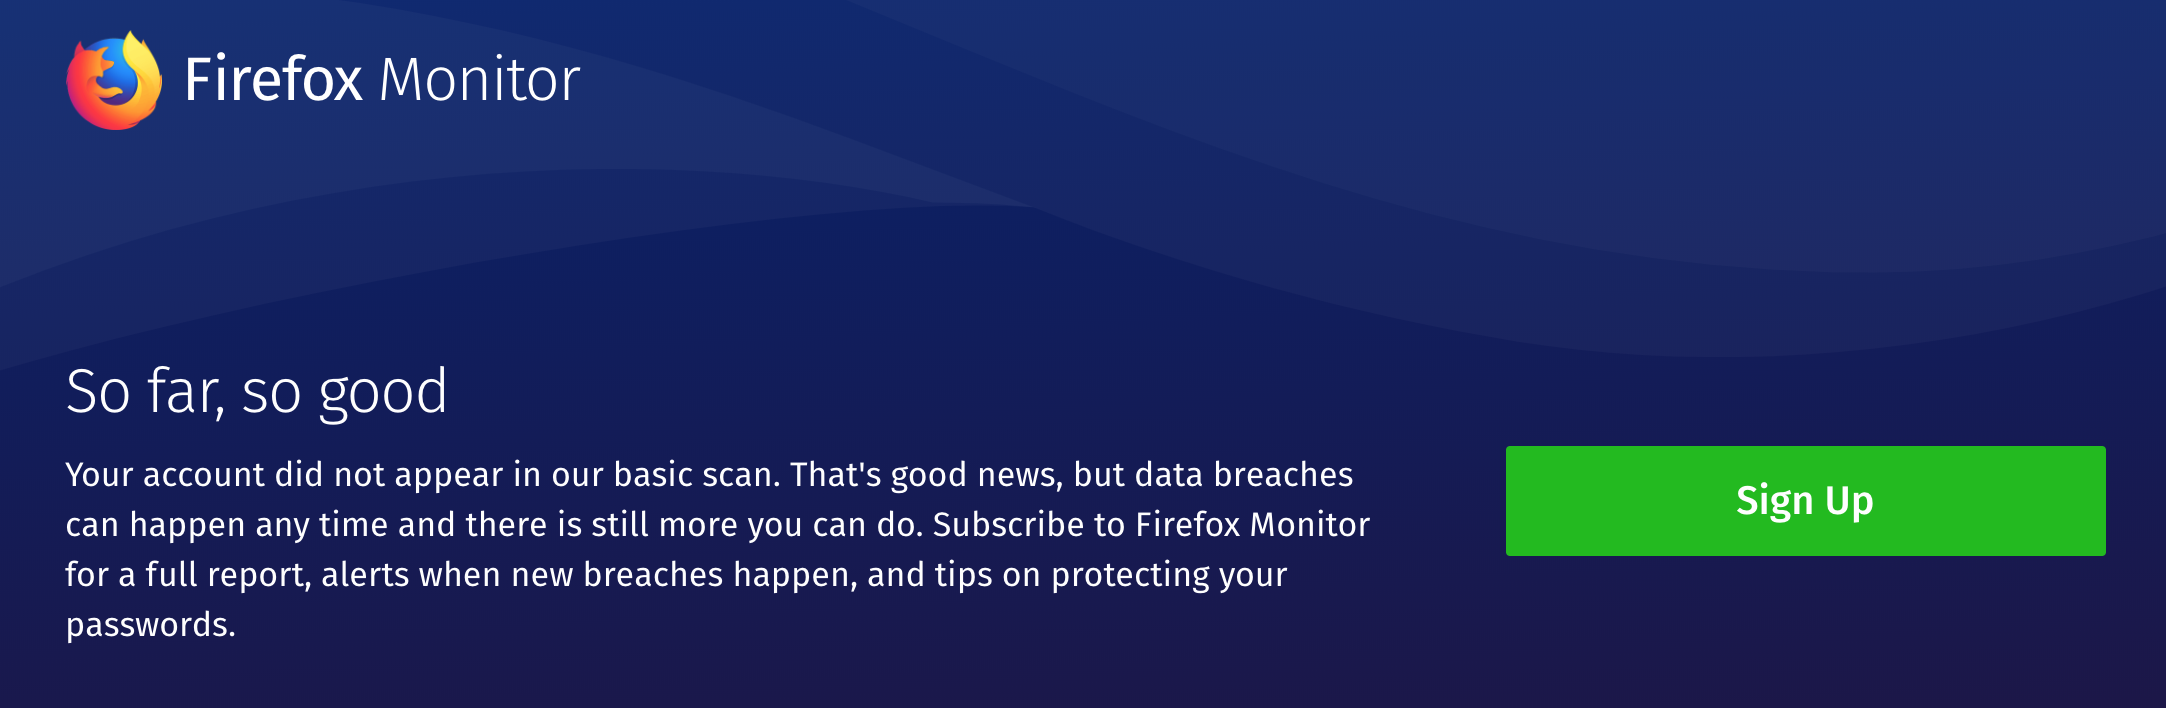 Mozilla 推出 Firefox Monitor ，可查询帐号是否外泄